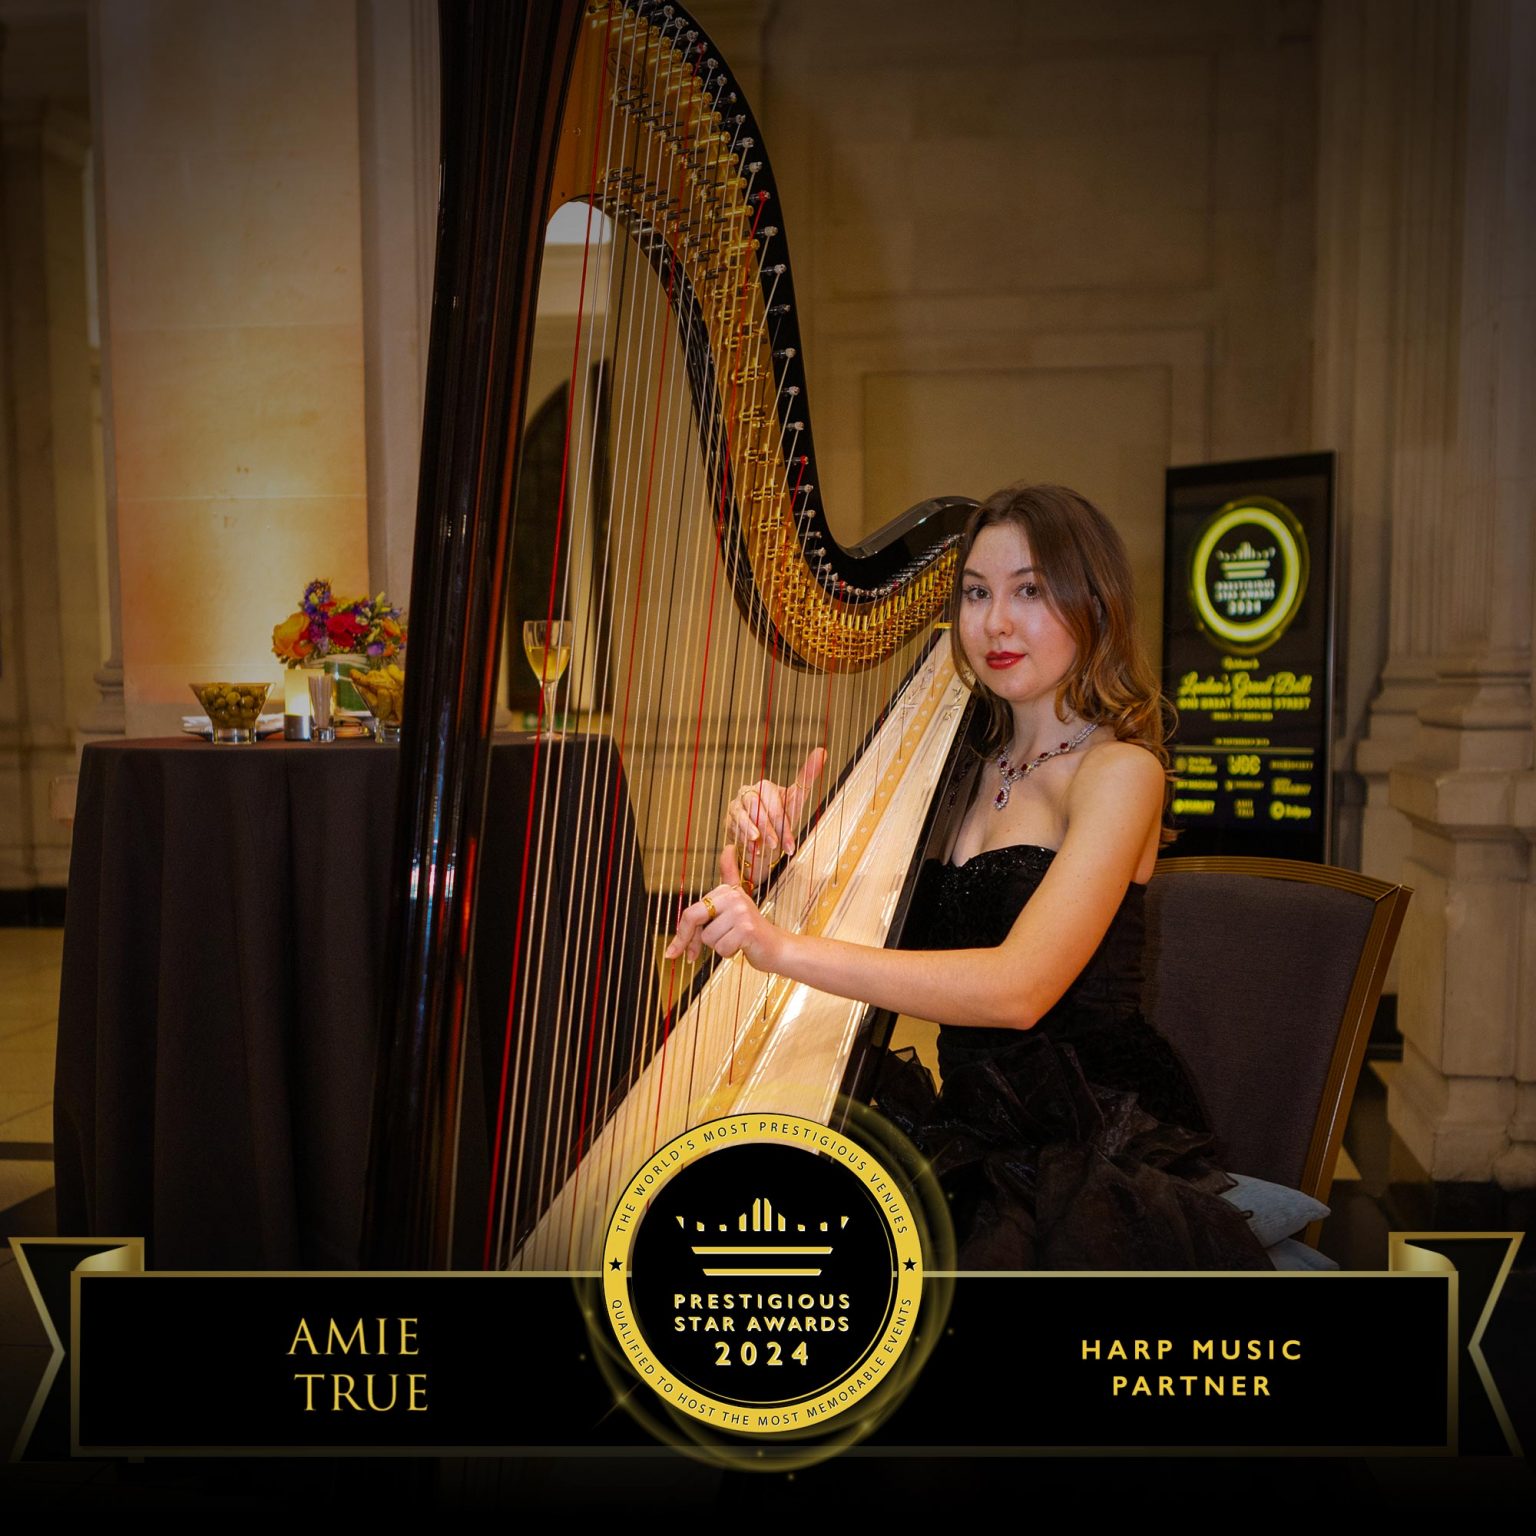 Harp Music Partner 2024   Amie True, Prestigious Star Awards